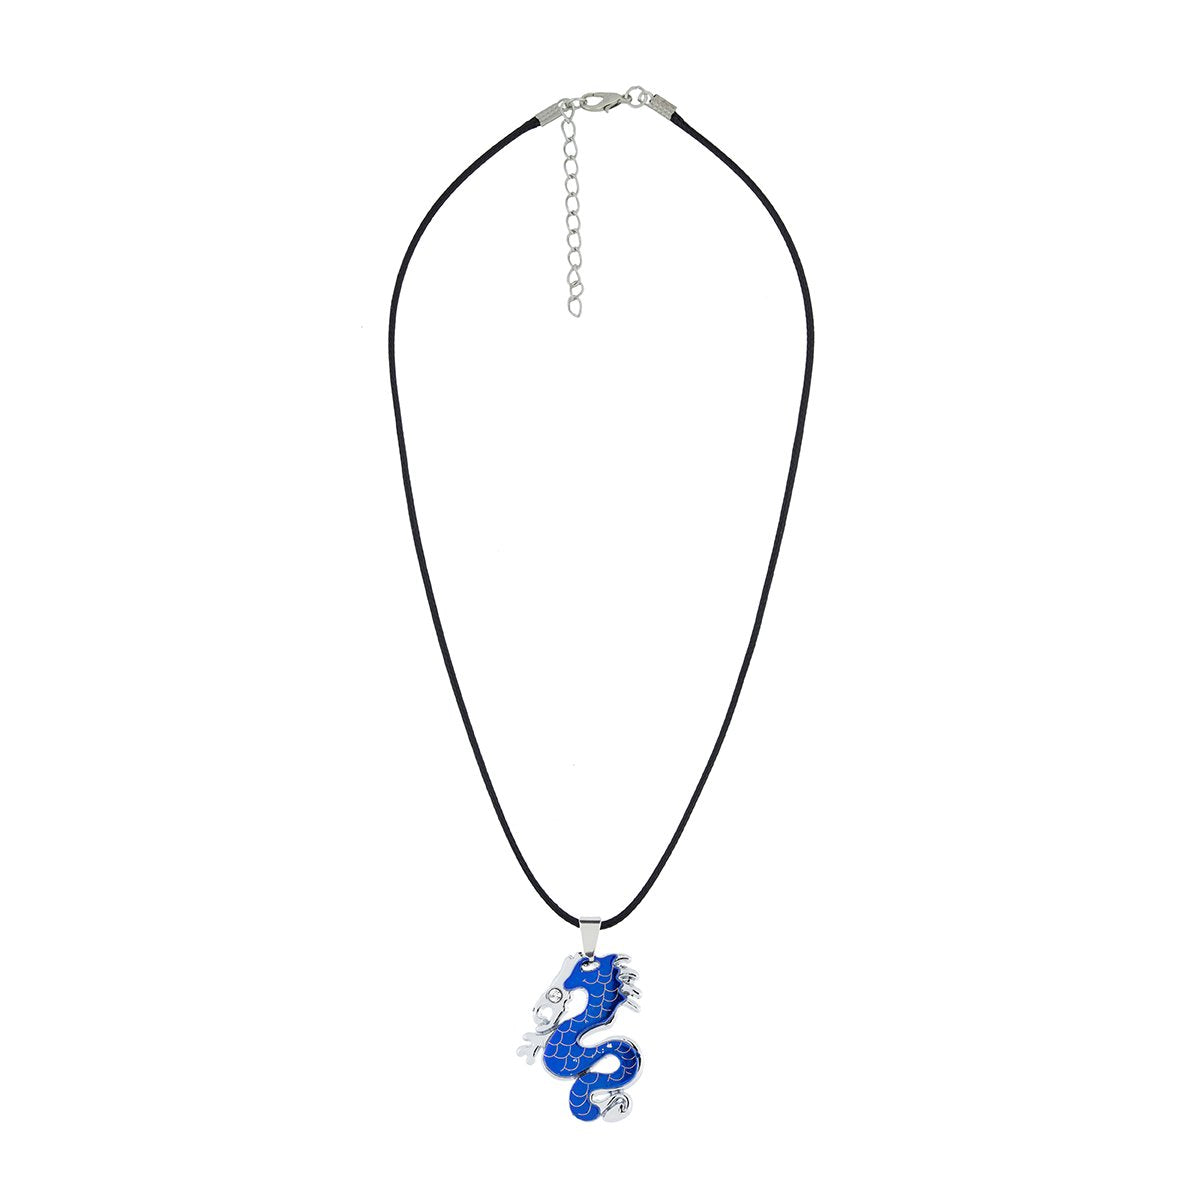 Punk Biker Dragon Snake Blue Stainless Steel Pendant Necklace Chain